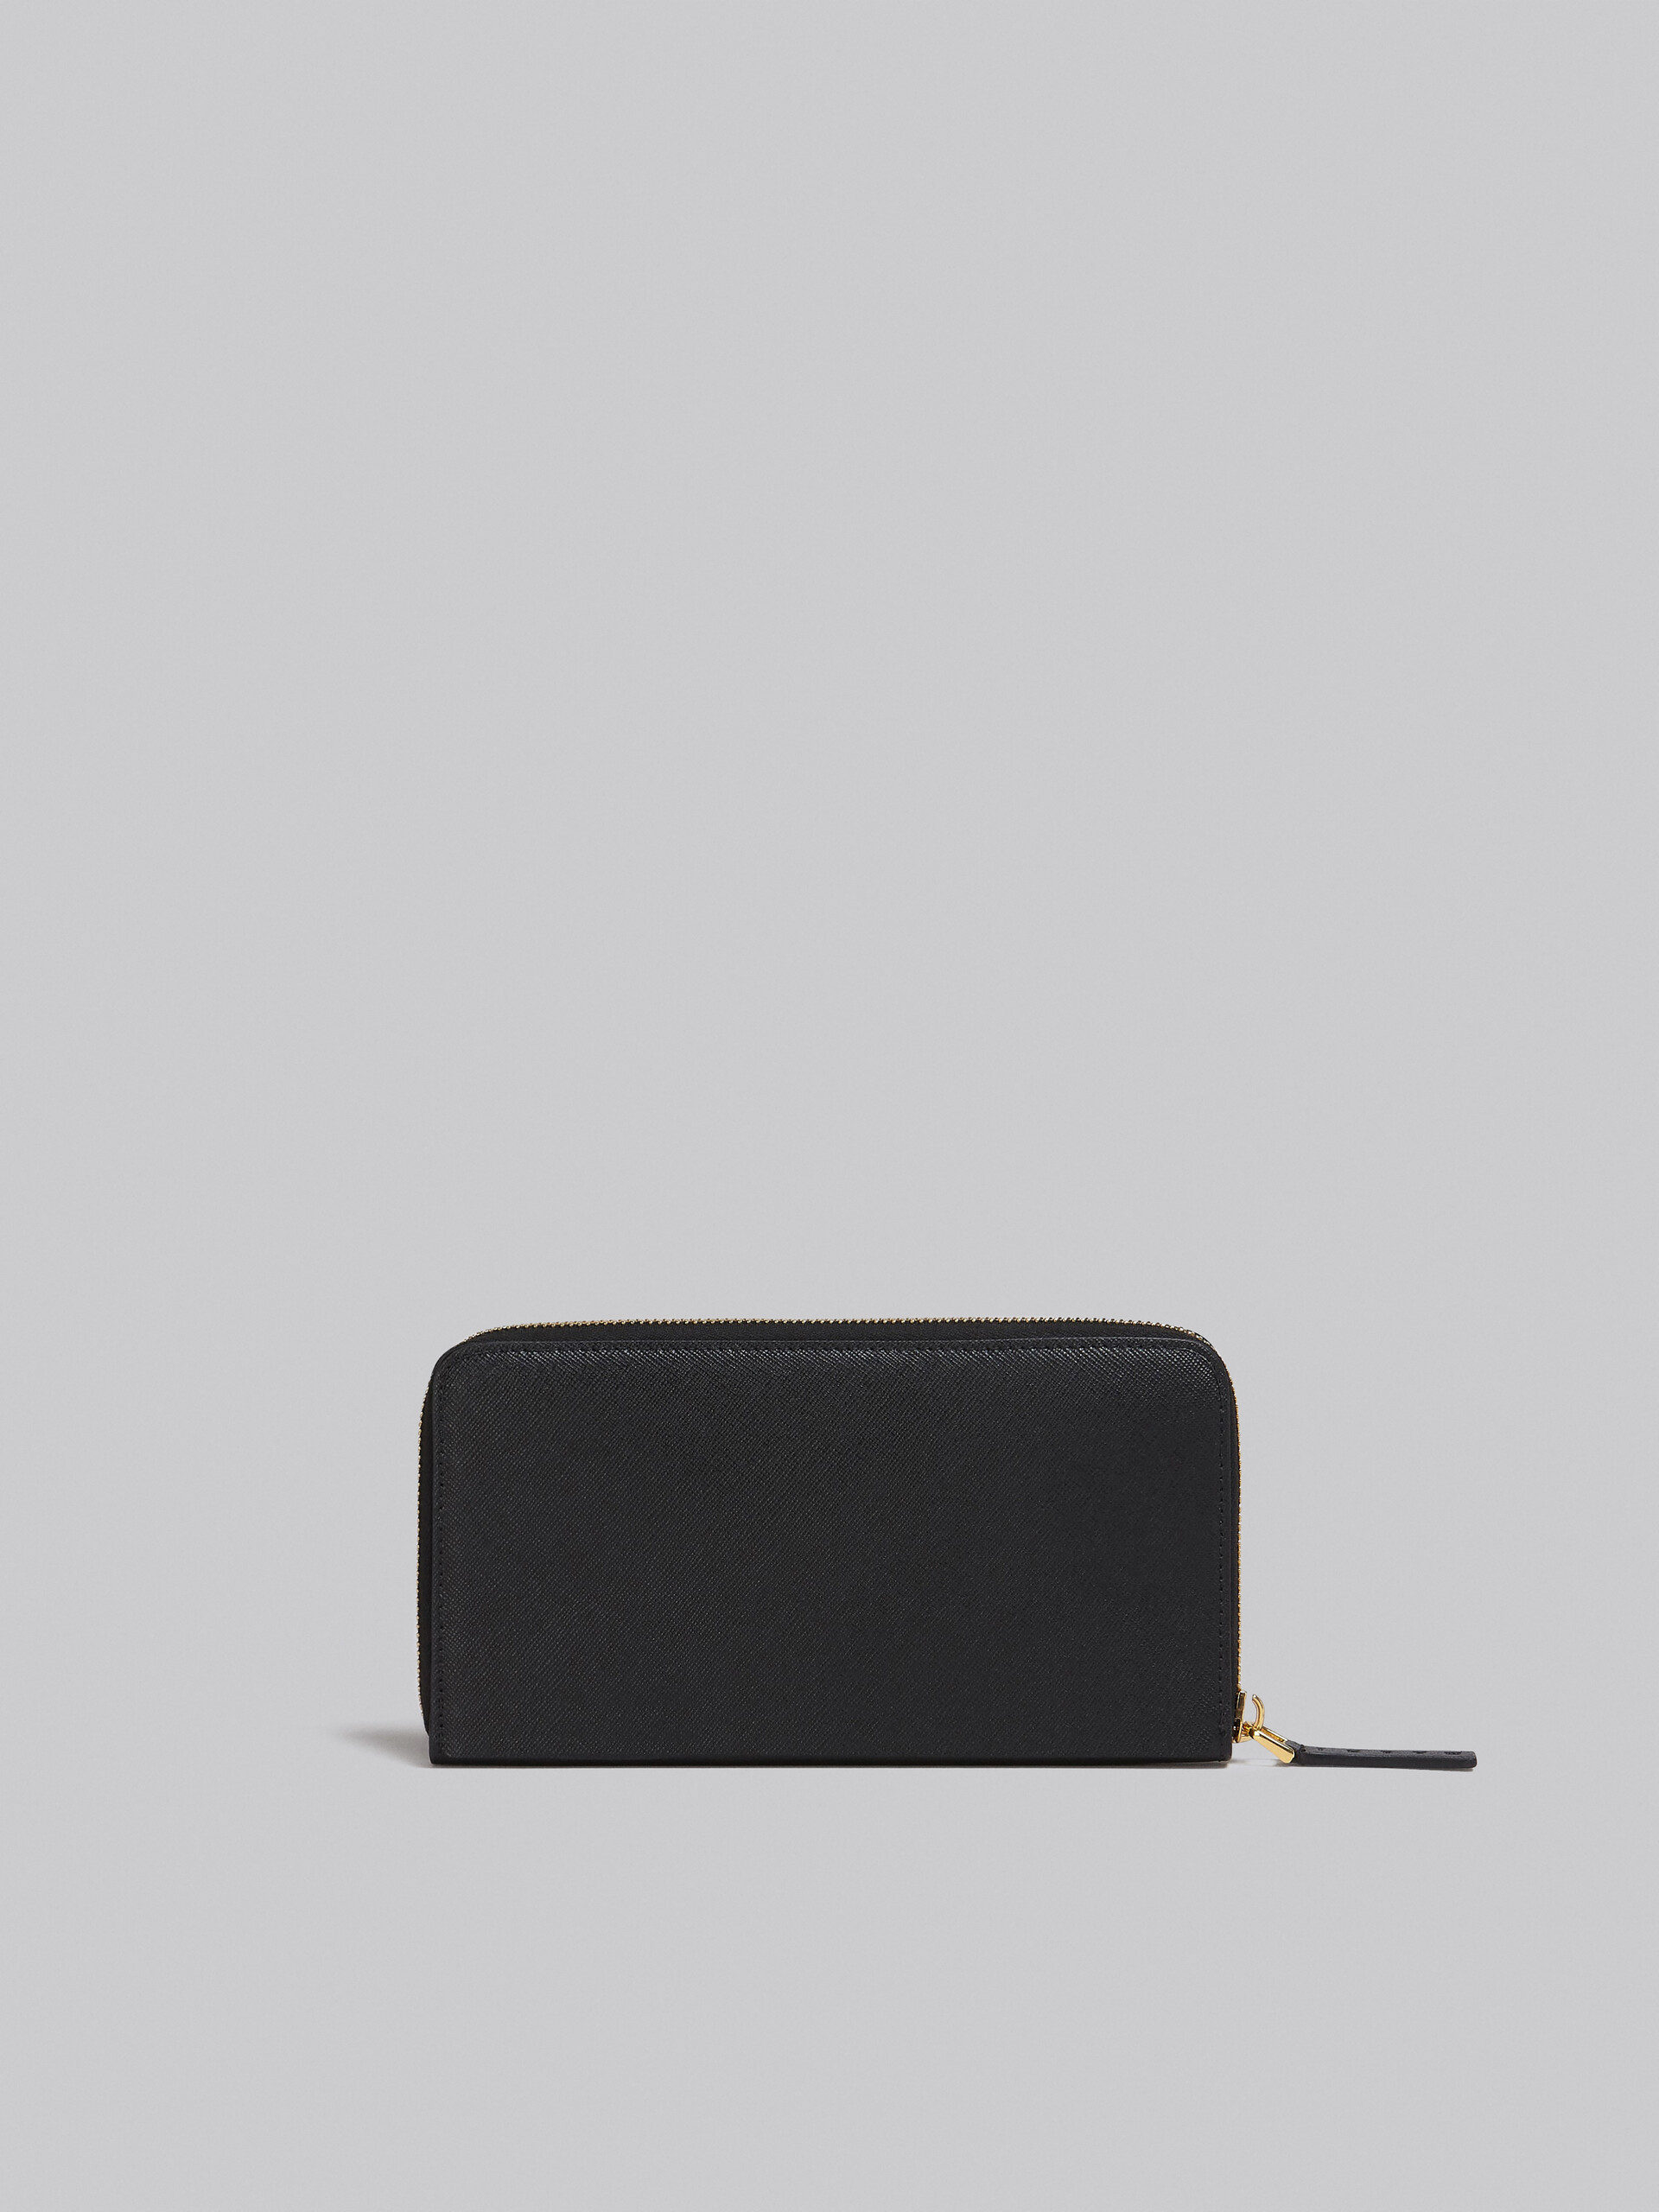 Black saffiano leather zip-around wallet - Wallets - Image 3